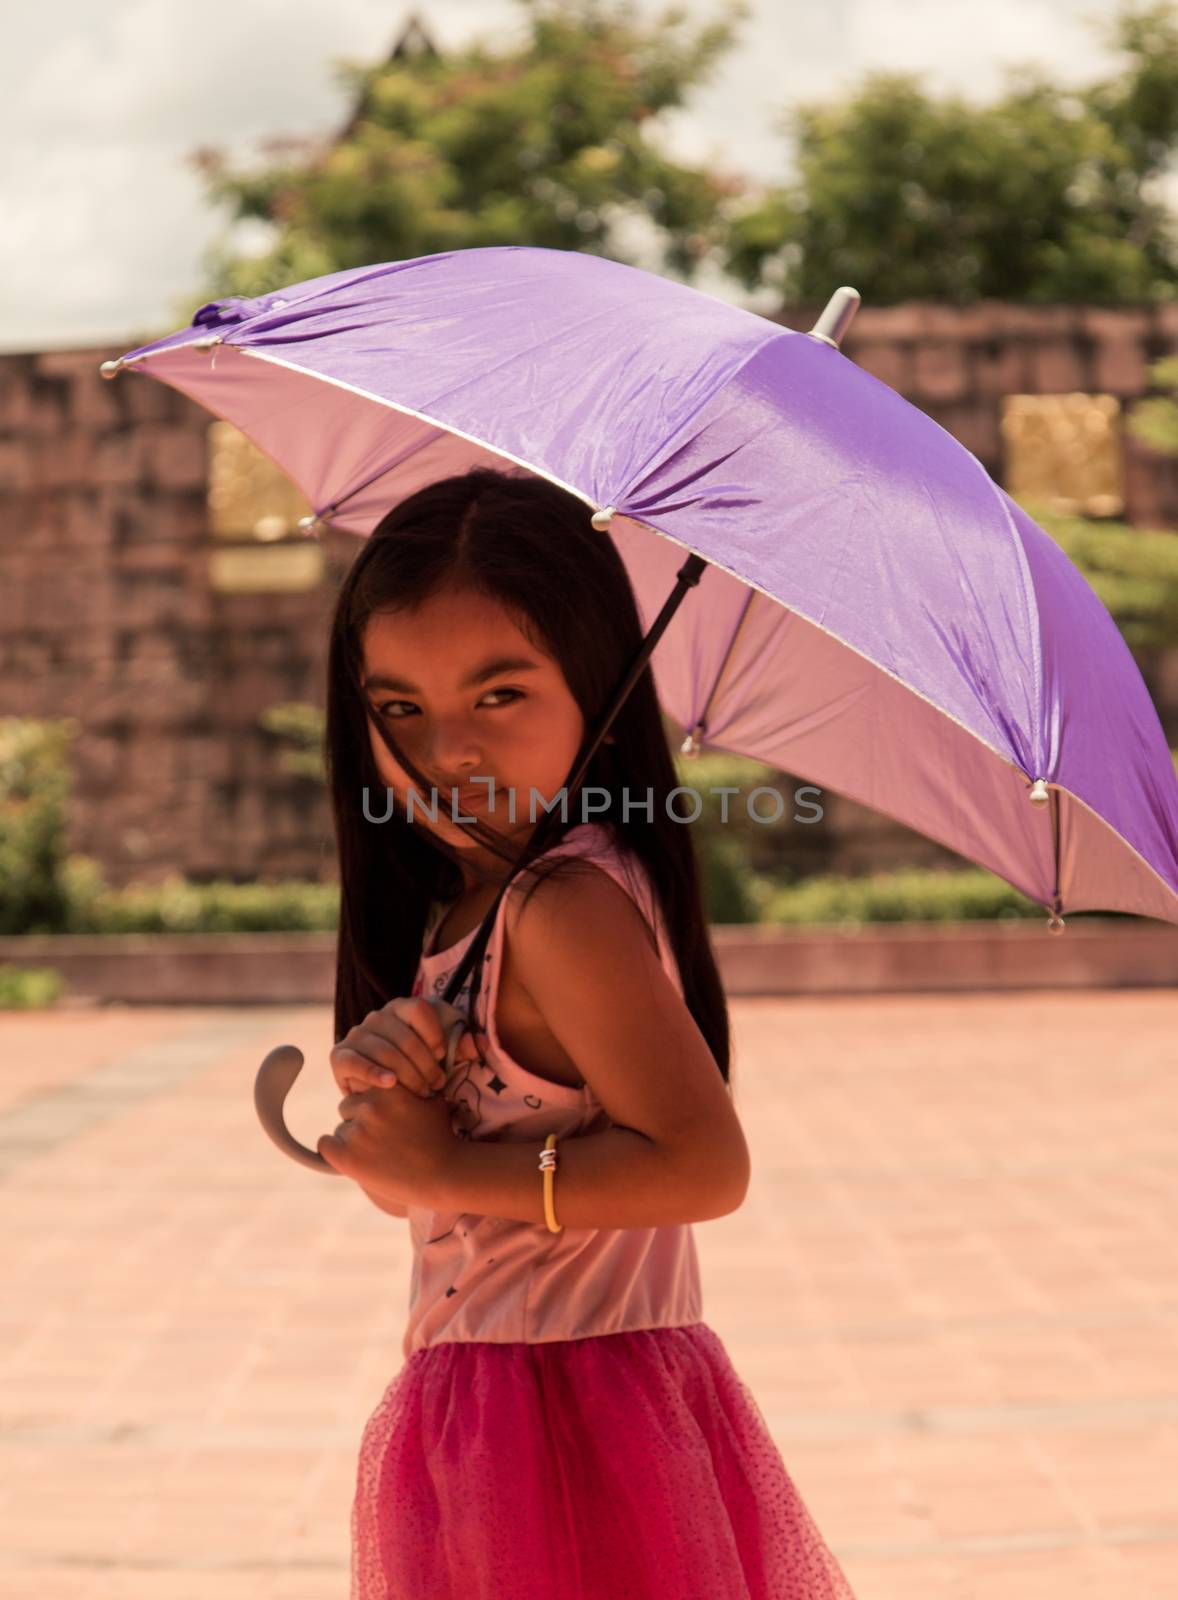 Cute girl standing in fashion photo in the sun